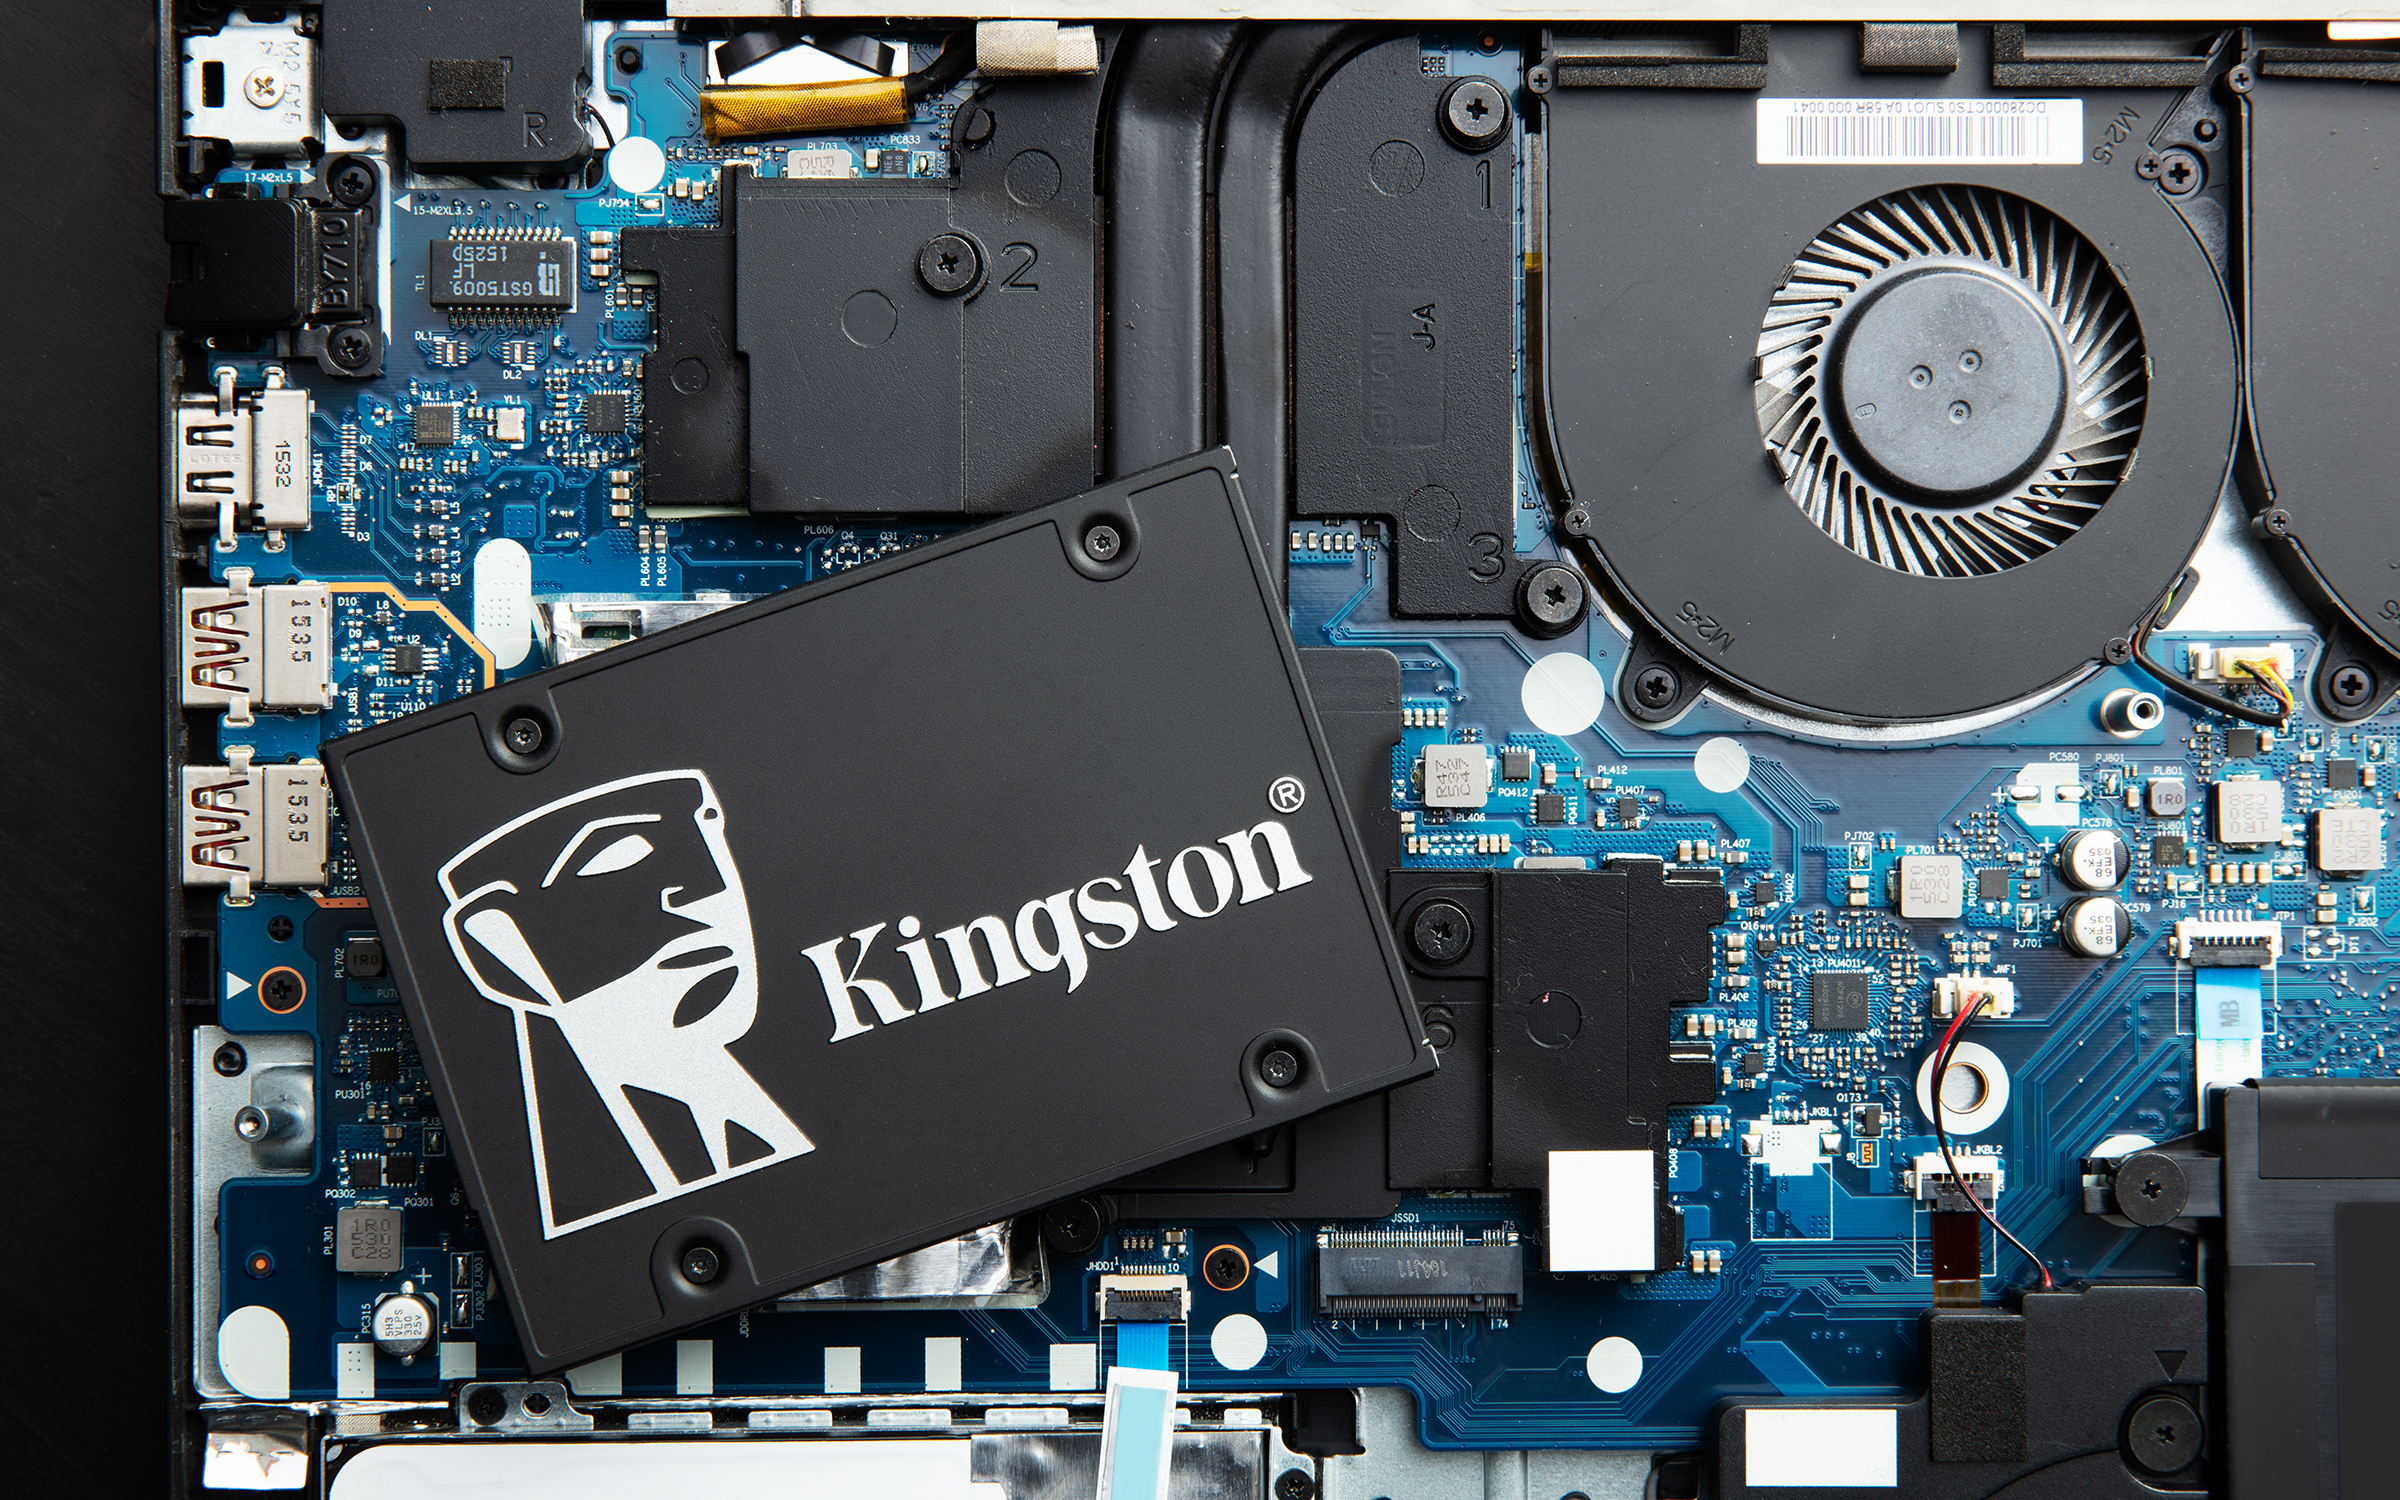 Kingston Technology KC600 2.5 1024 GB Serial ATA III 3D TLC